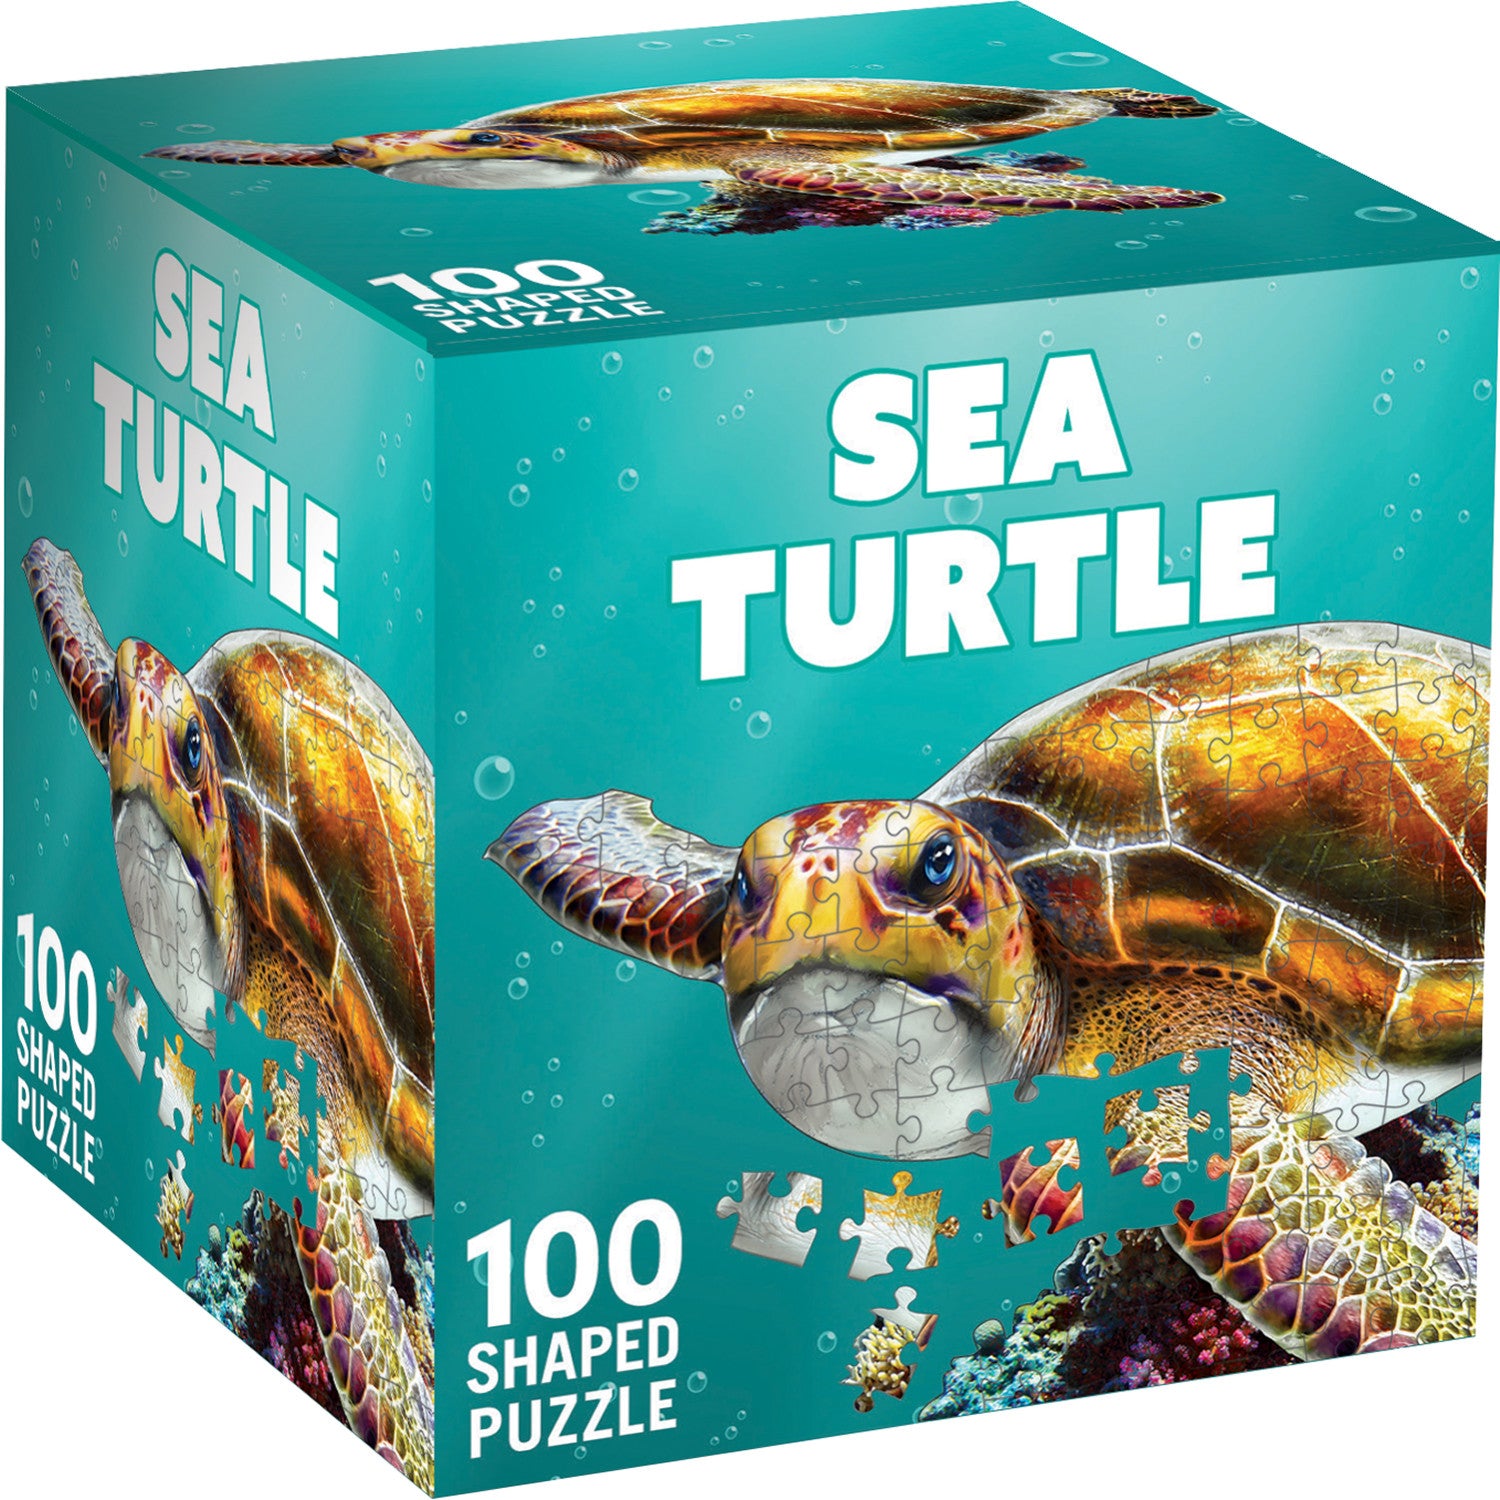 Sea Turtle 100 Piece Shaped Jigsaw Puzzle